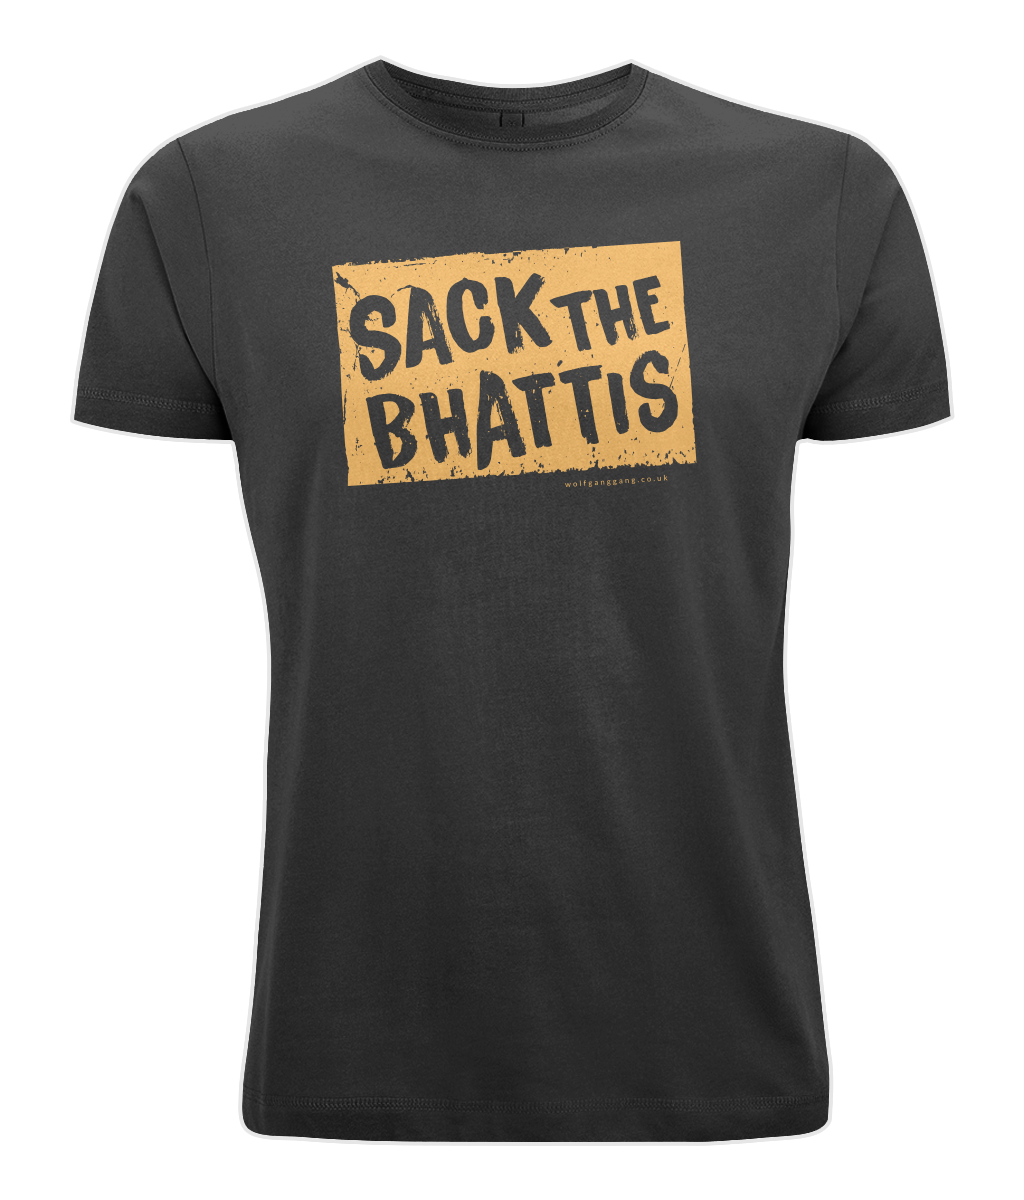 Sack the Bhattis